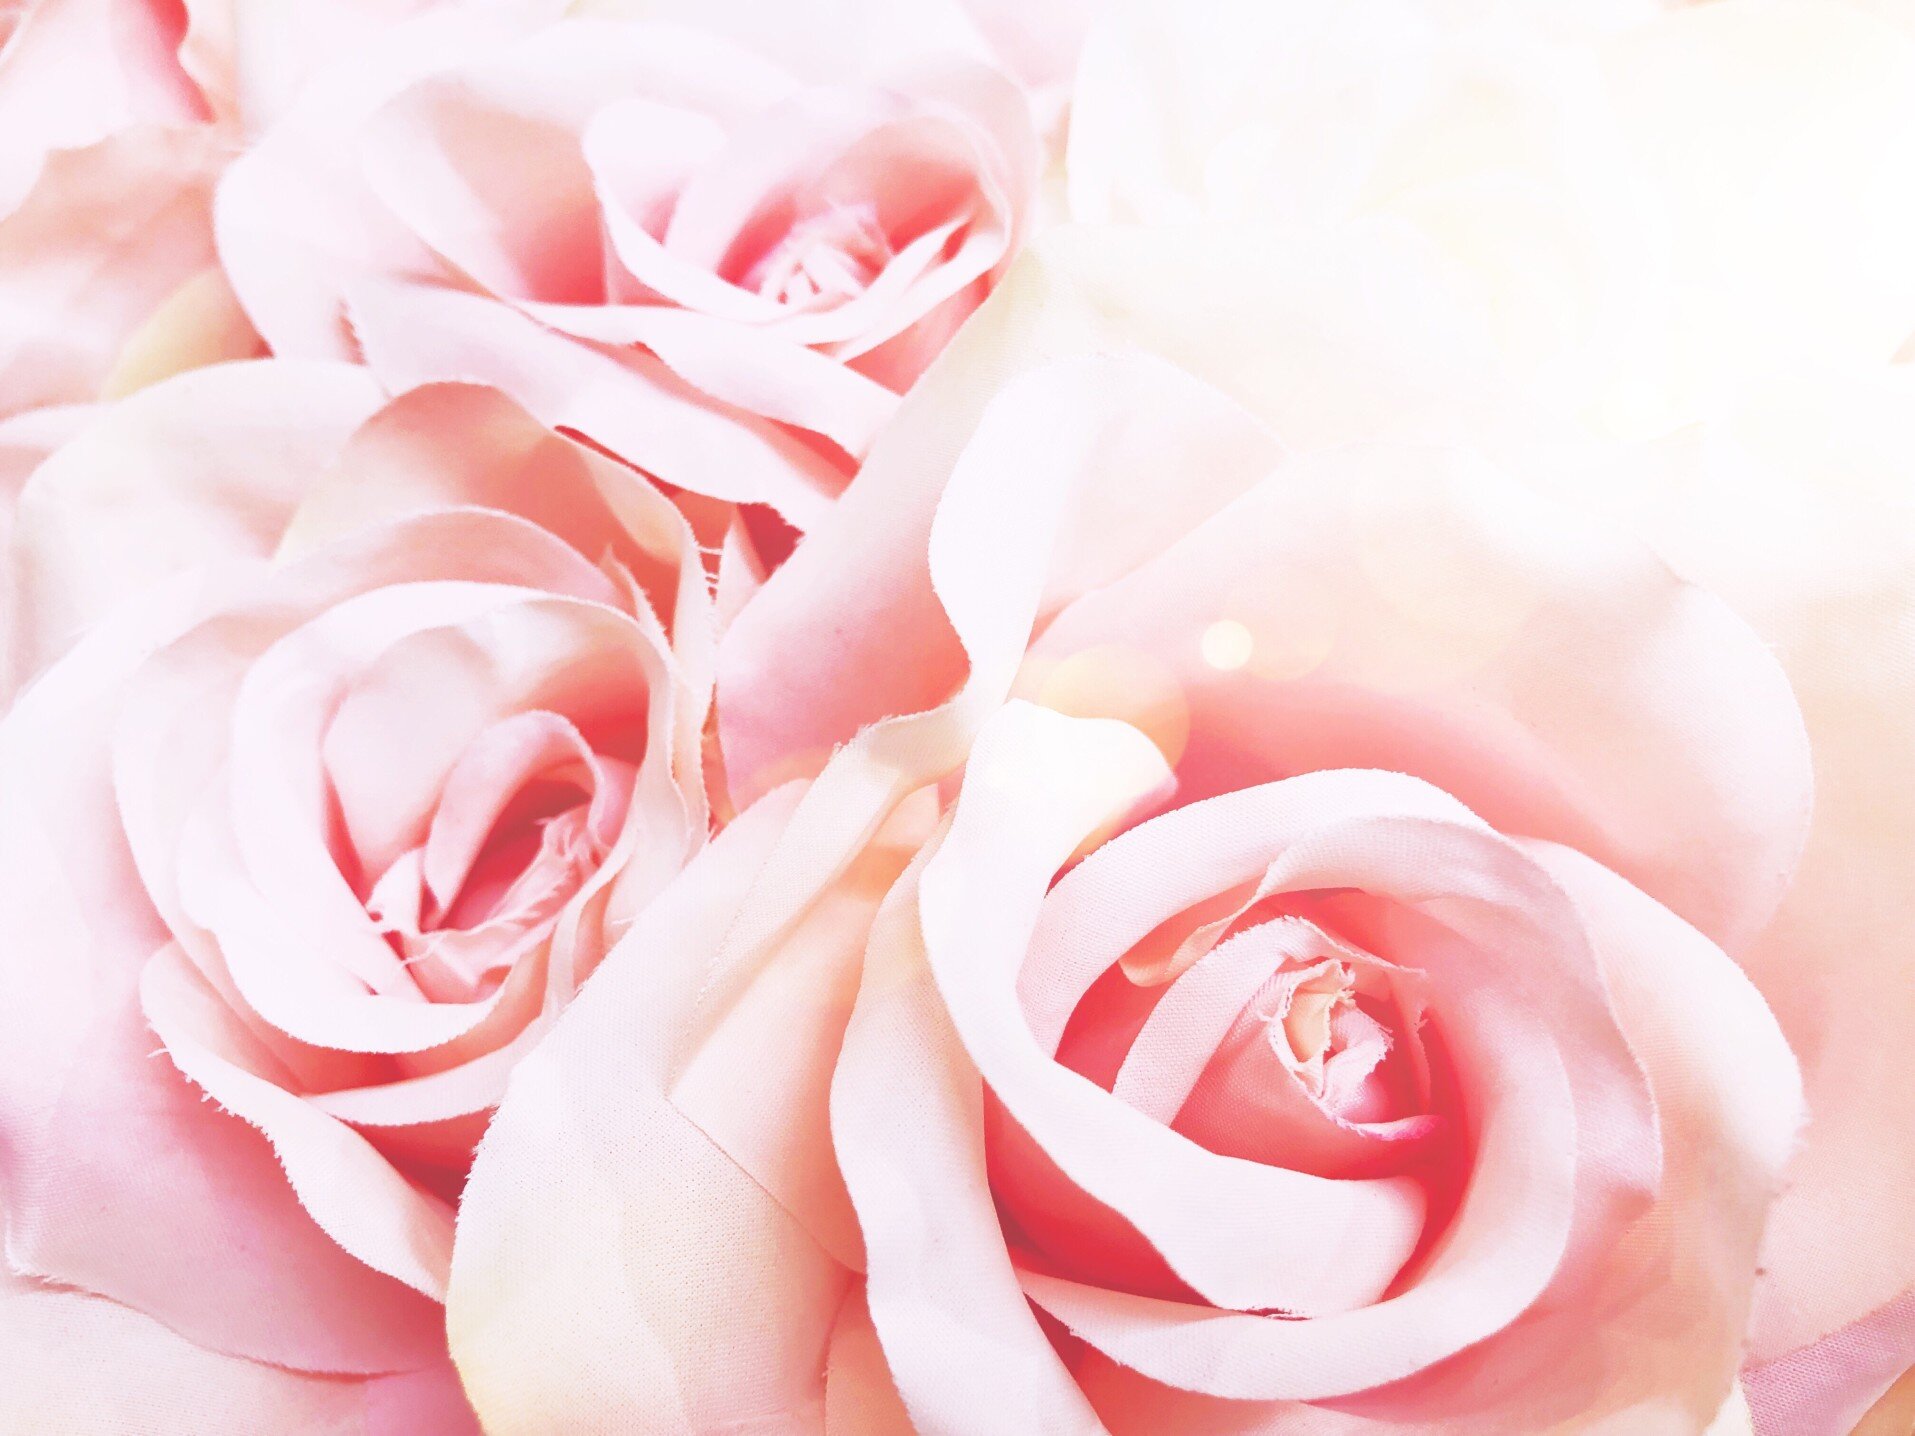 artificial-rose-macro-photo-flower-closeup-peach-roses-pink-roses-peach-colored-pink-color-pinkish_t20_eokAXa.jpg